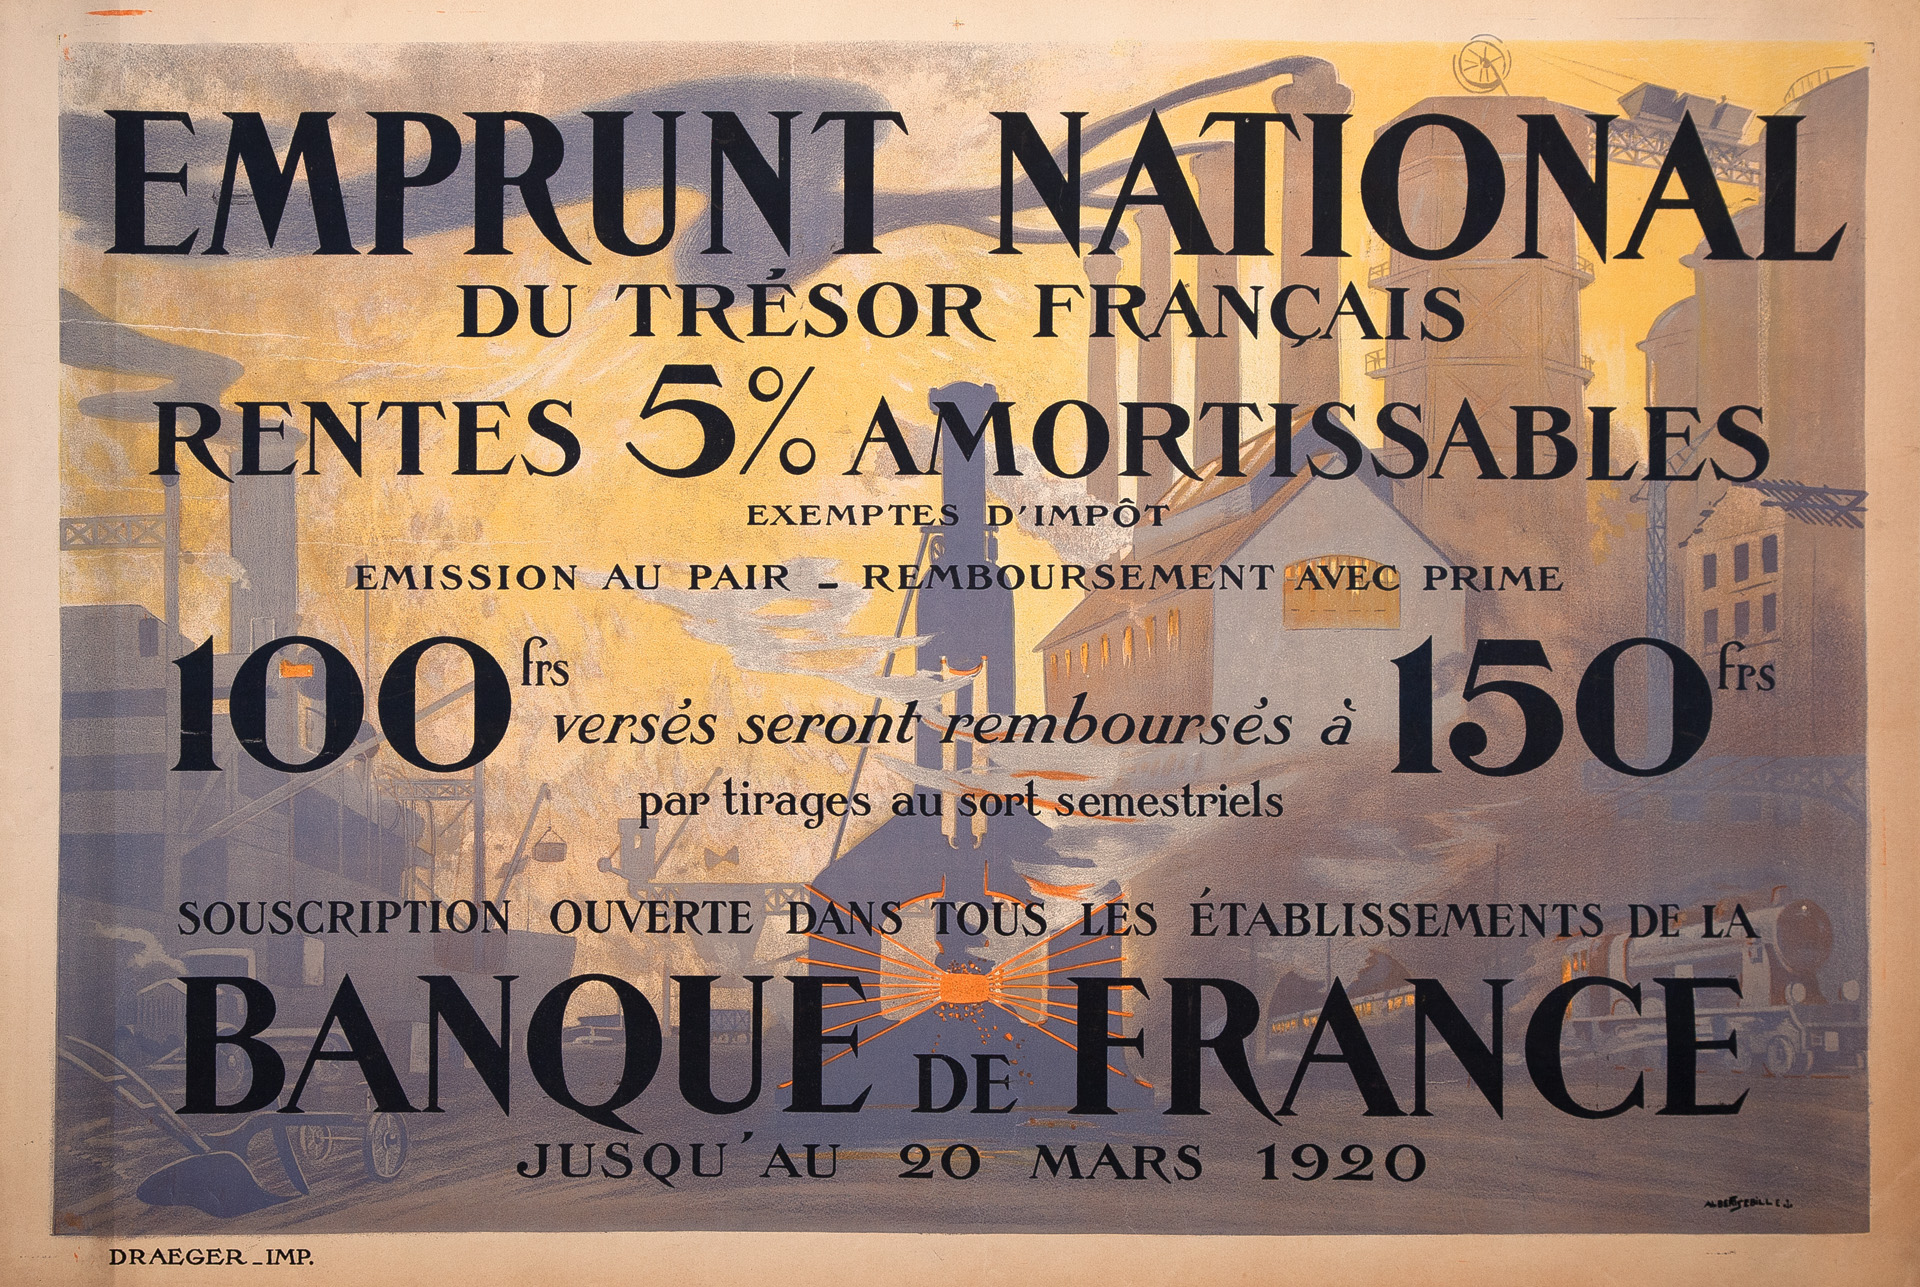 Emprunt National du trésor Français